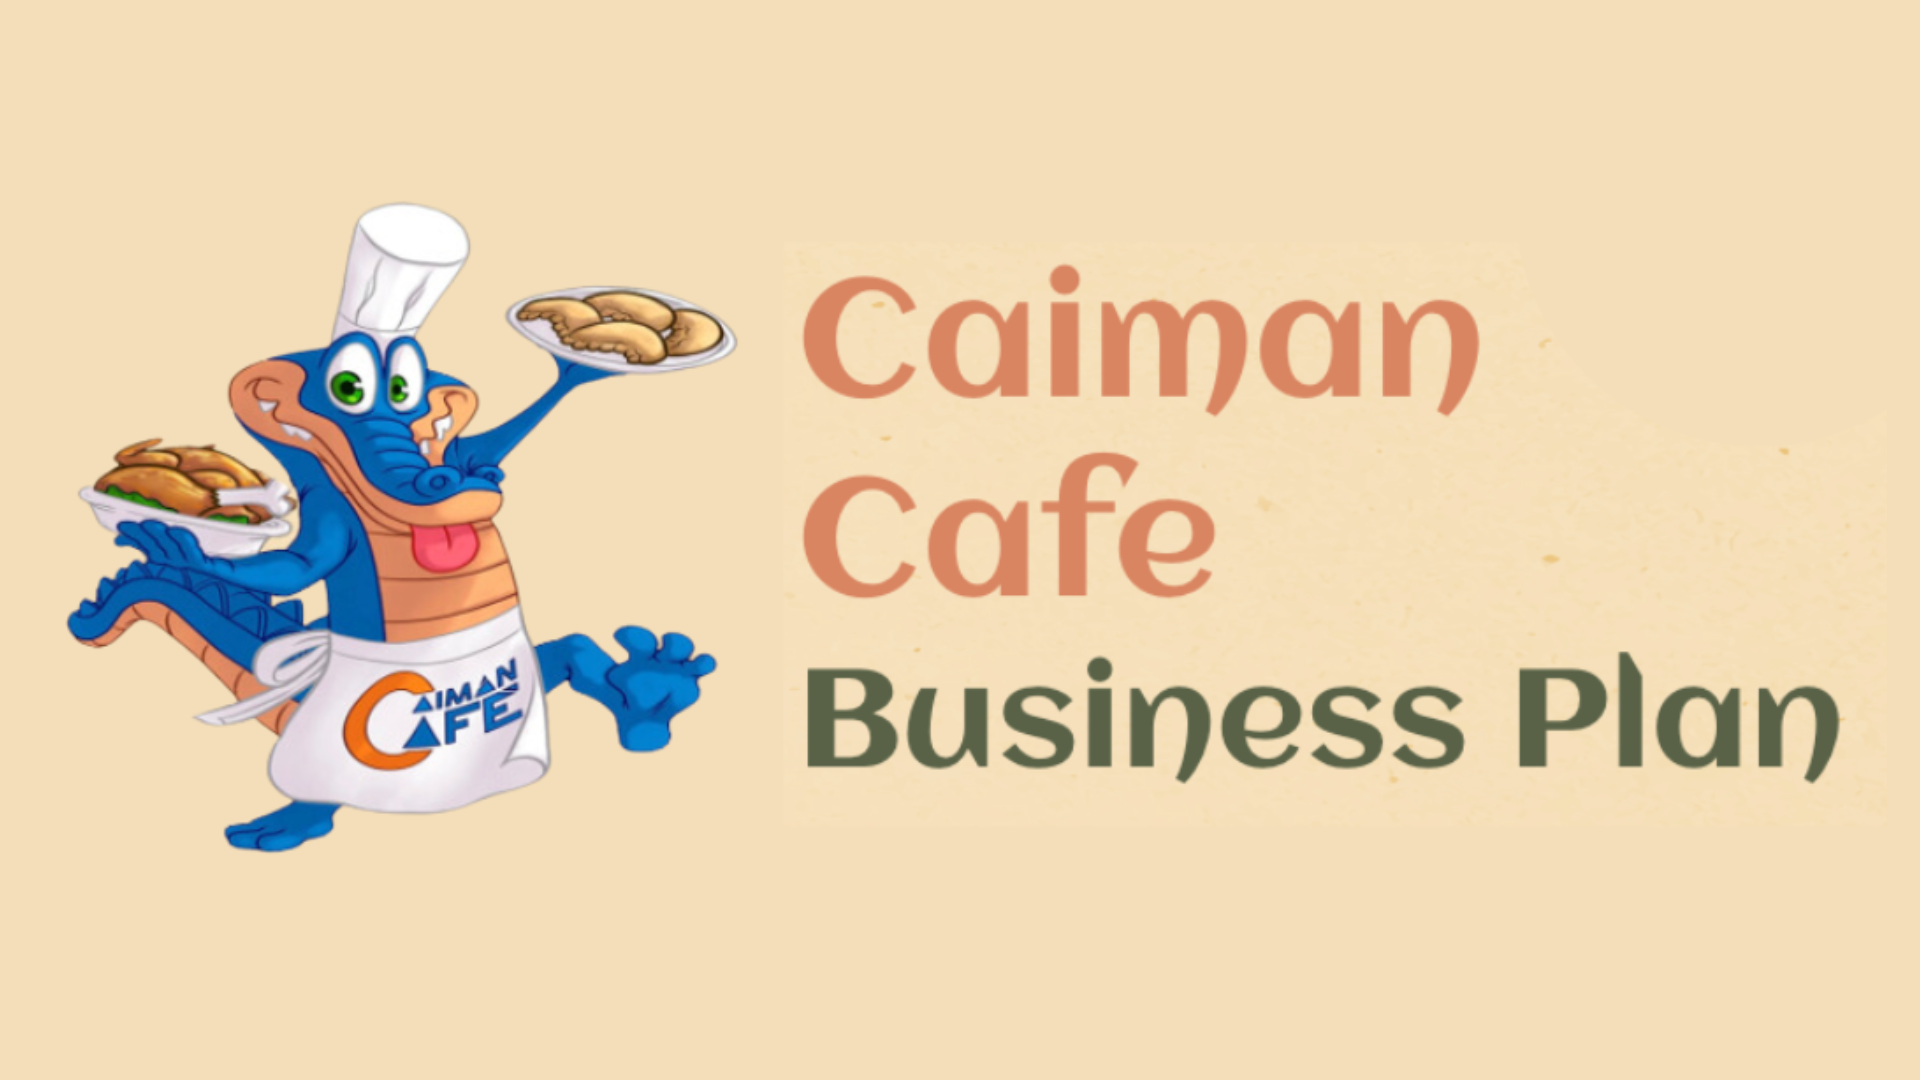 Caiman Cafe Business